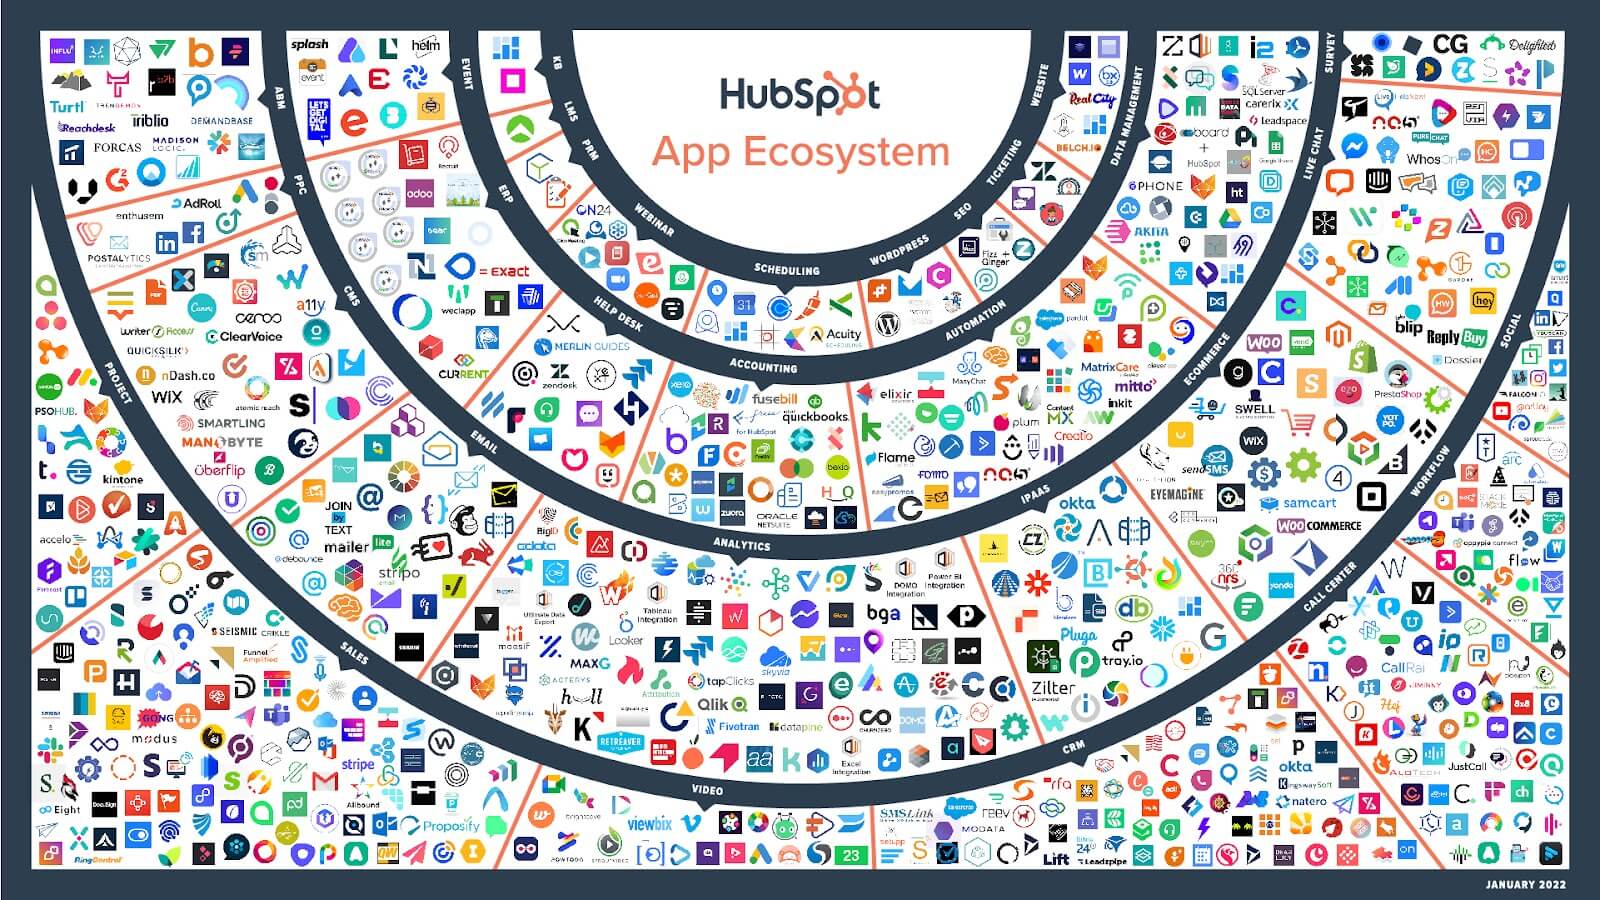 hubspost-tech-ecosystem-apps-business-impact-partnerships-crossbeam